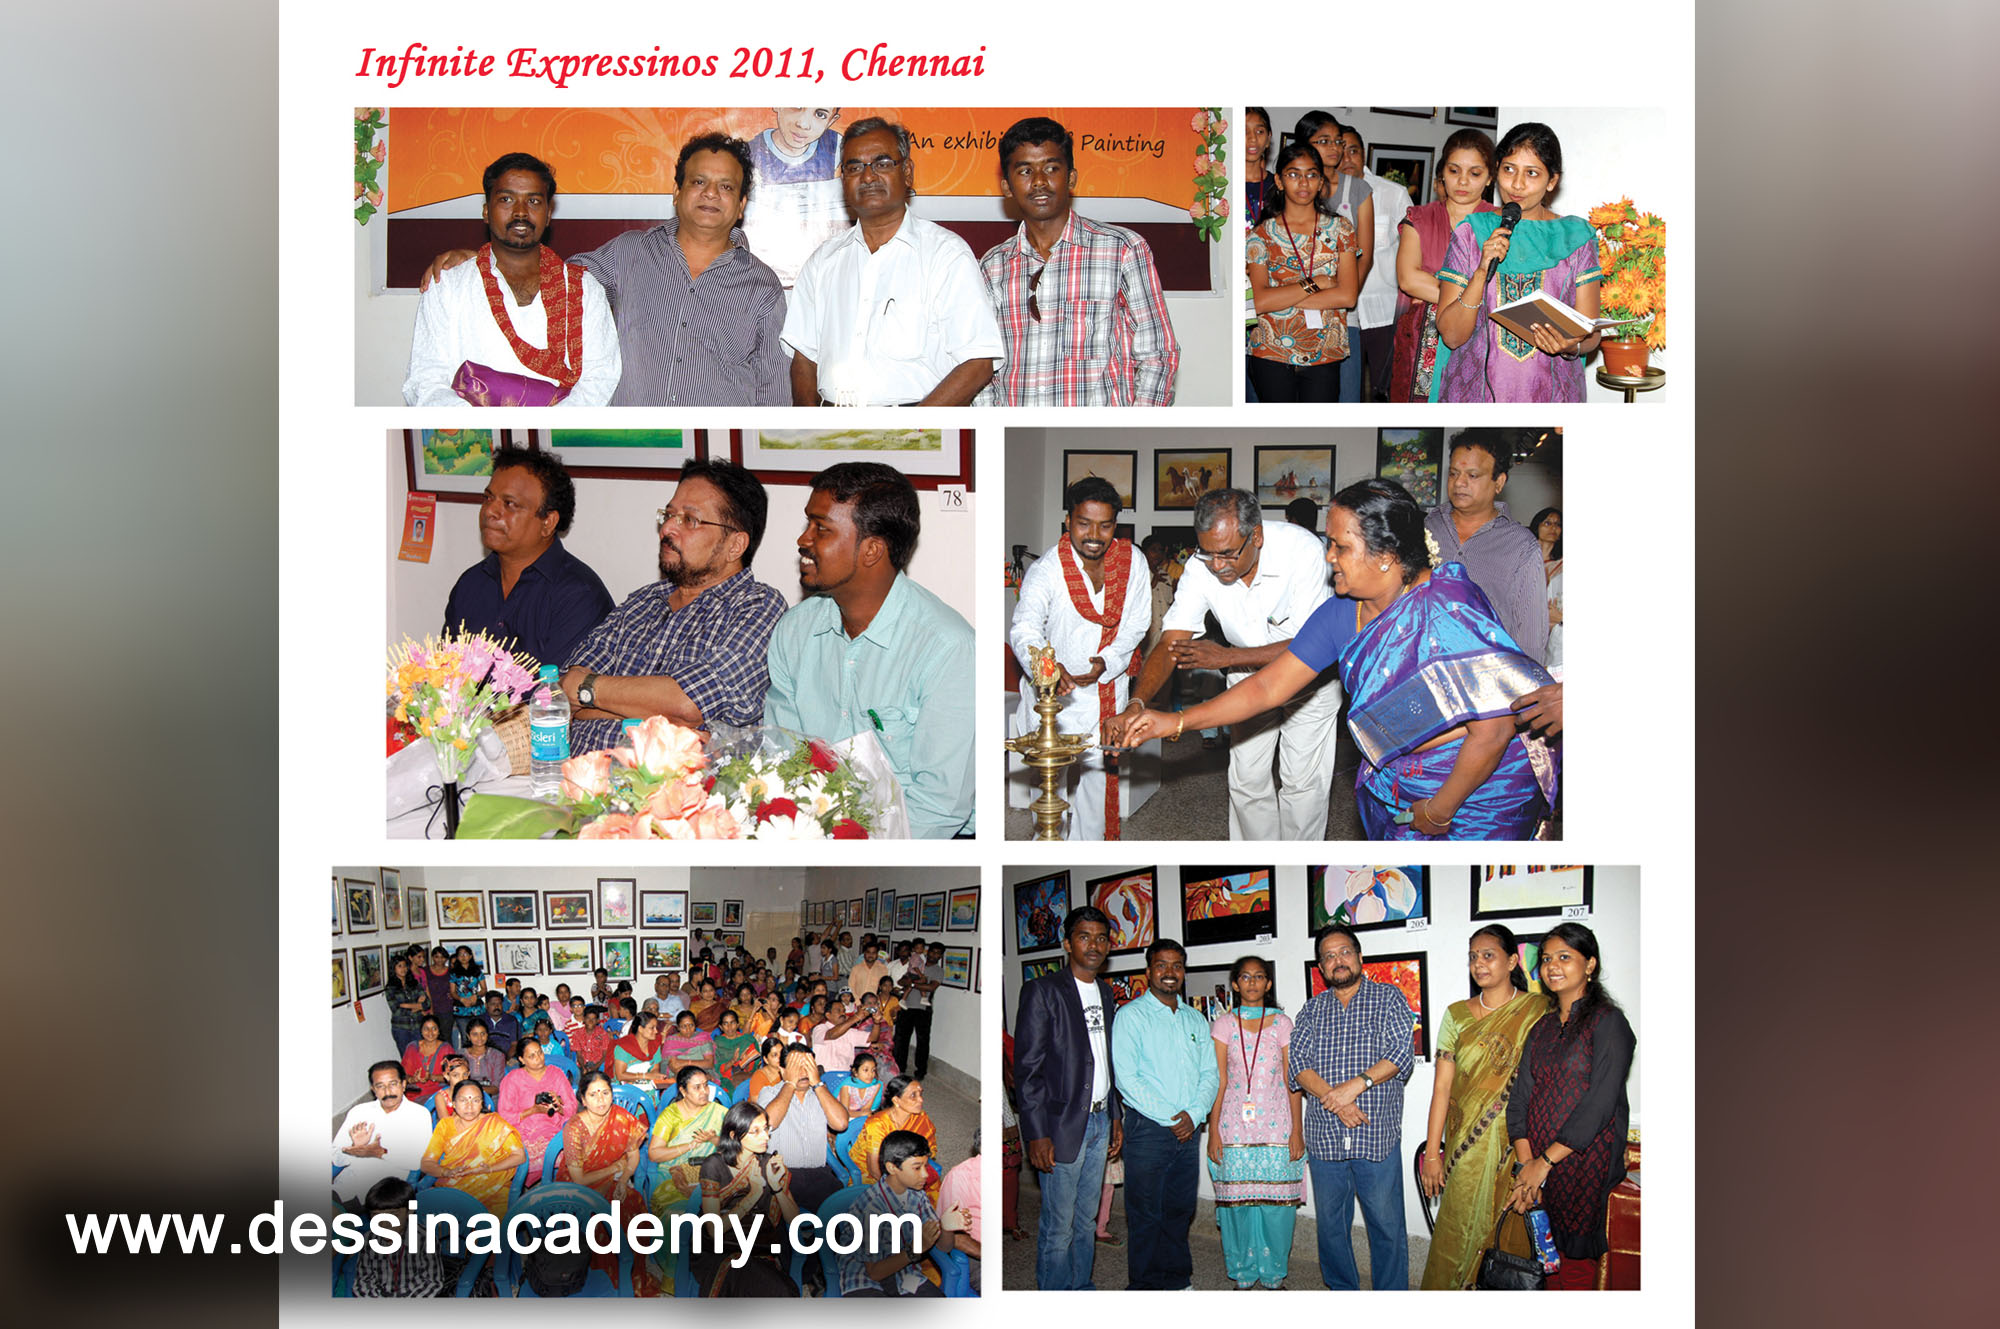 Dessin School of arts Event Gallery 5, Painting classes in AdyarTime kids Pre-School